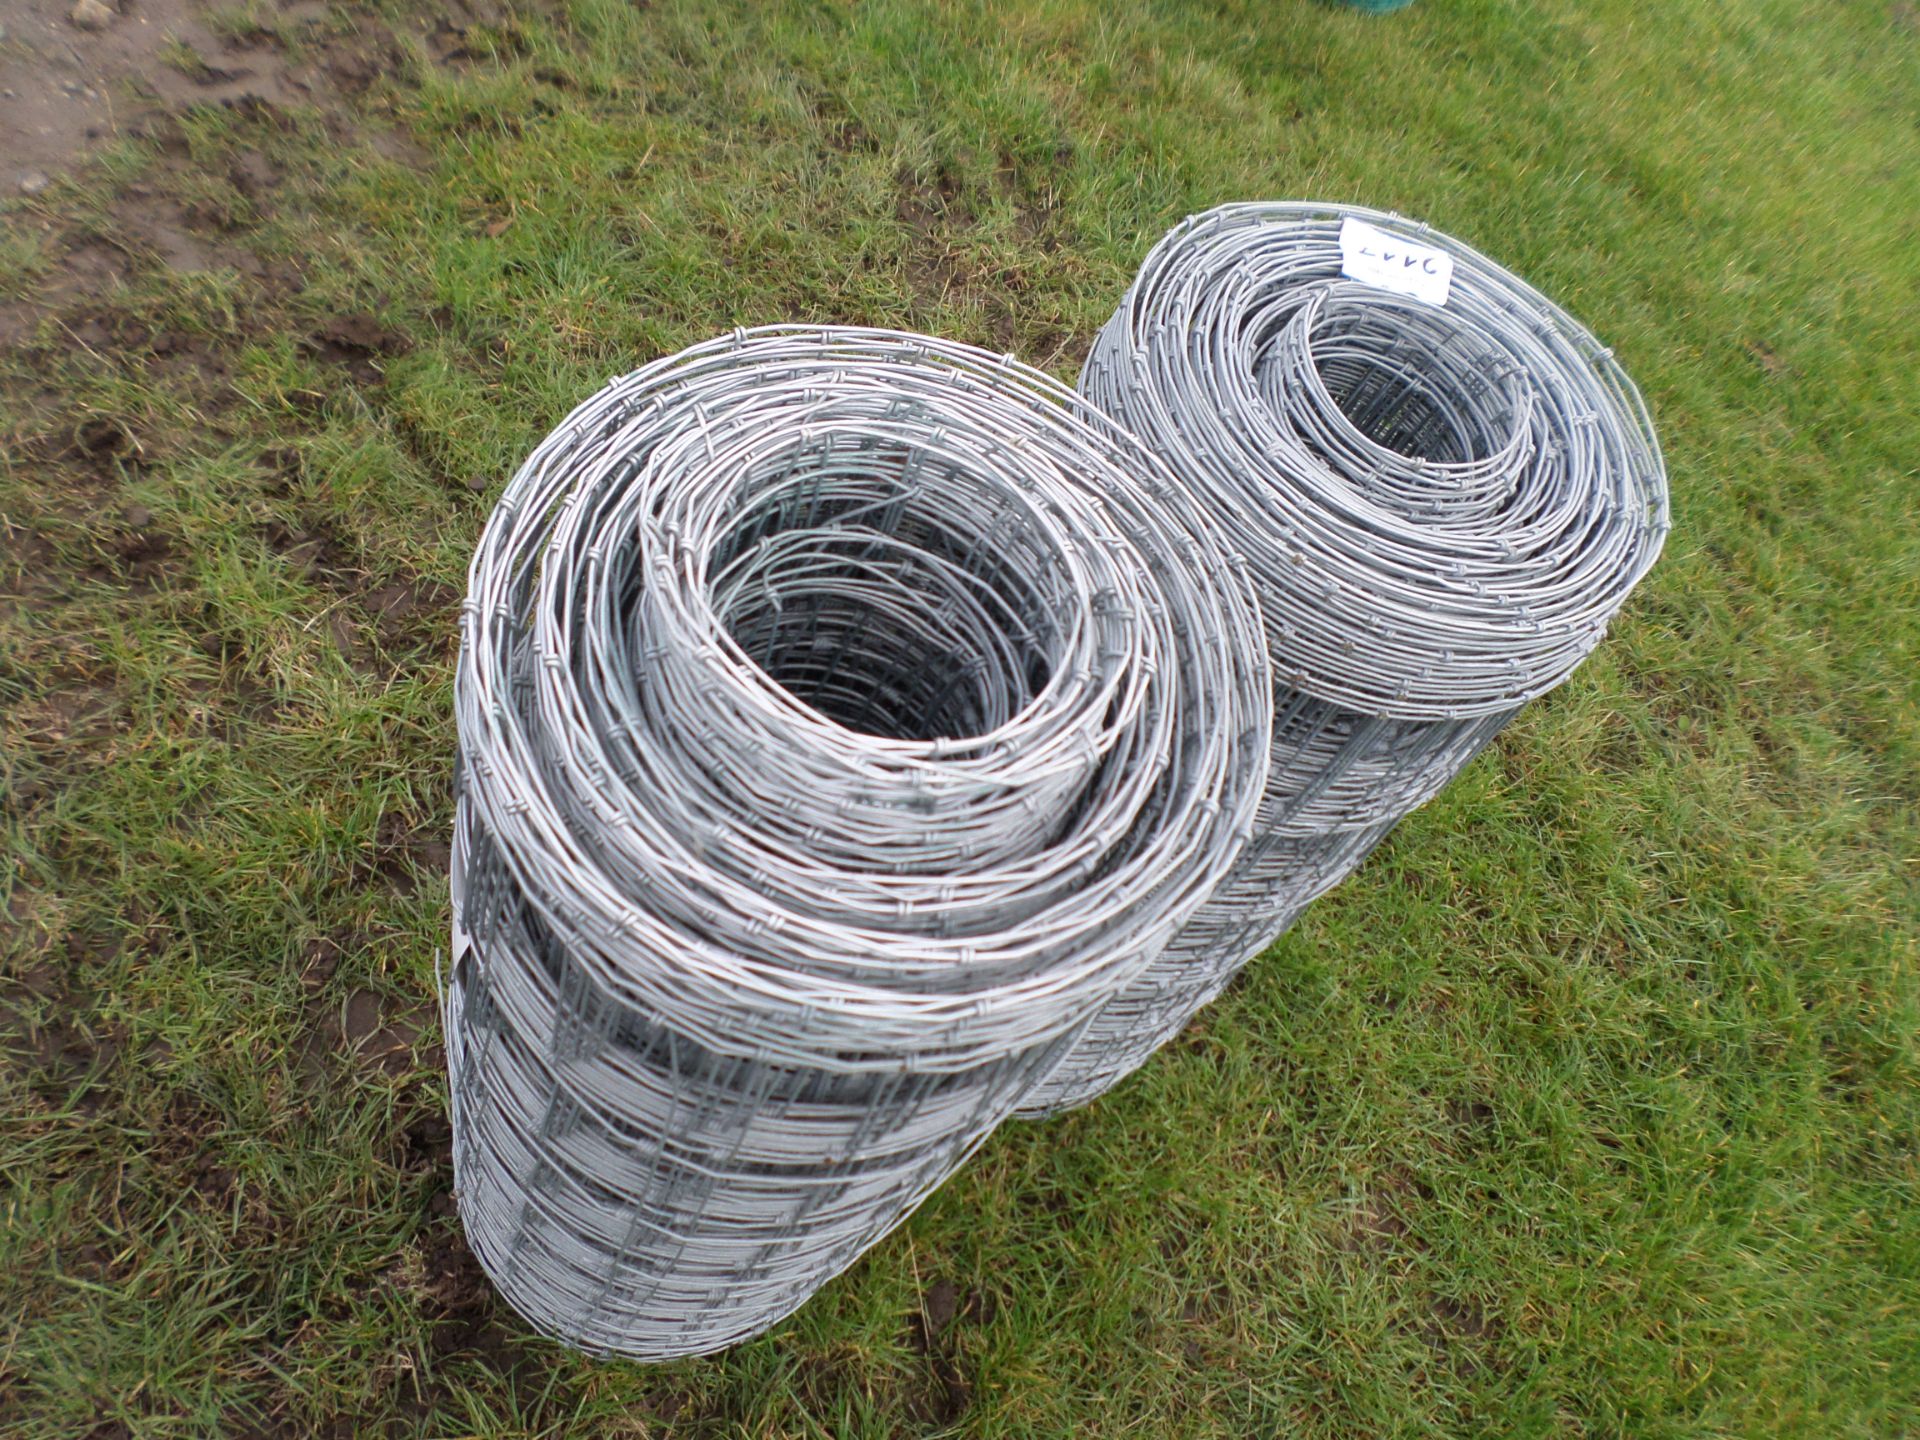 2 x 100m rolls of stock netting NO VAT - Image 2 of 2